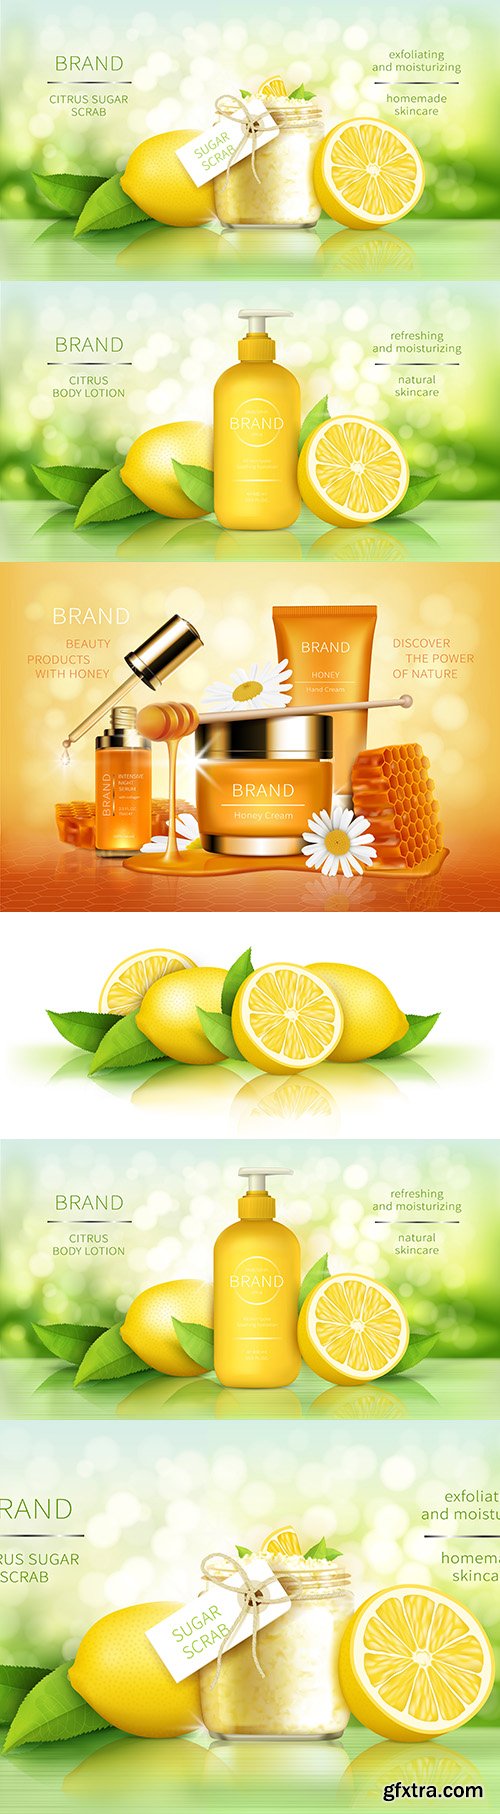 Skin care cosmetics lemon and honey advertising poster